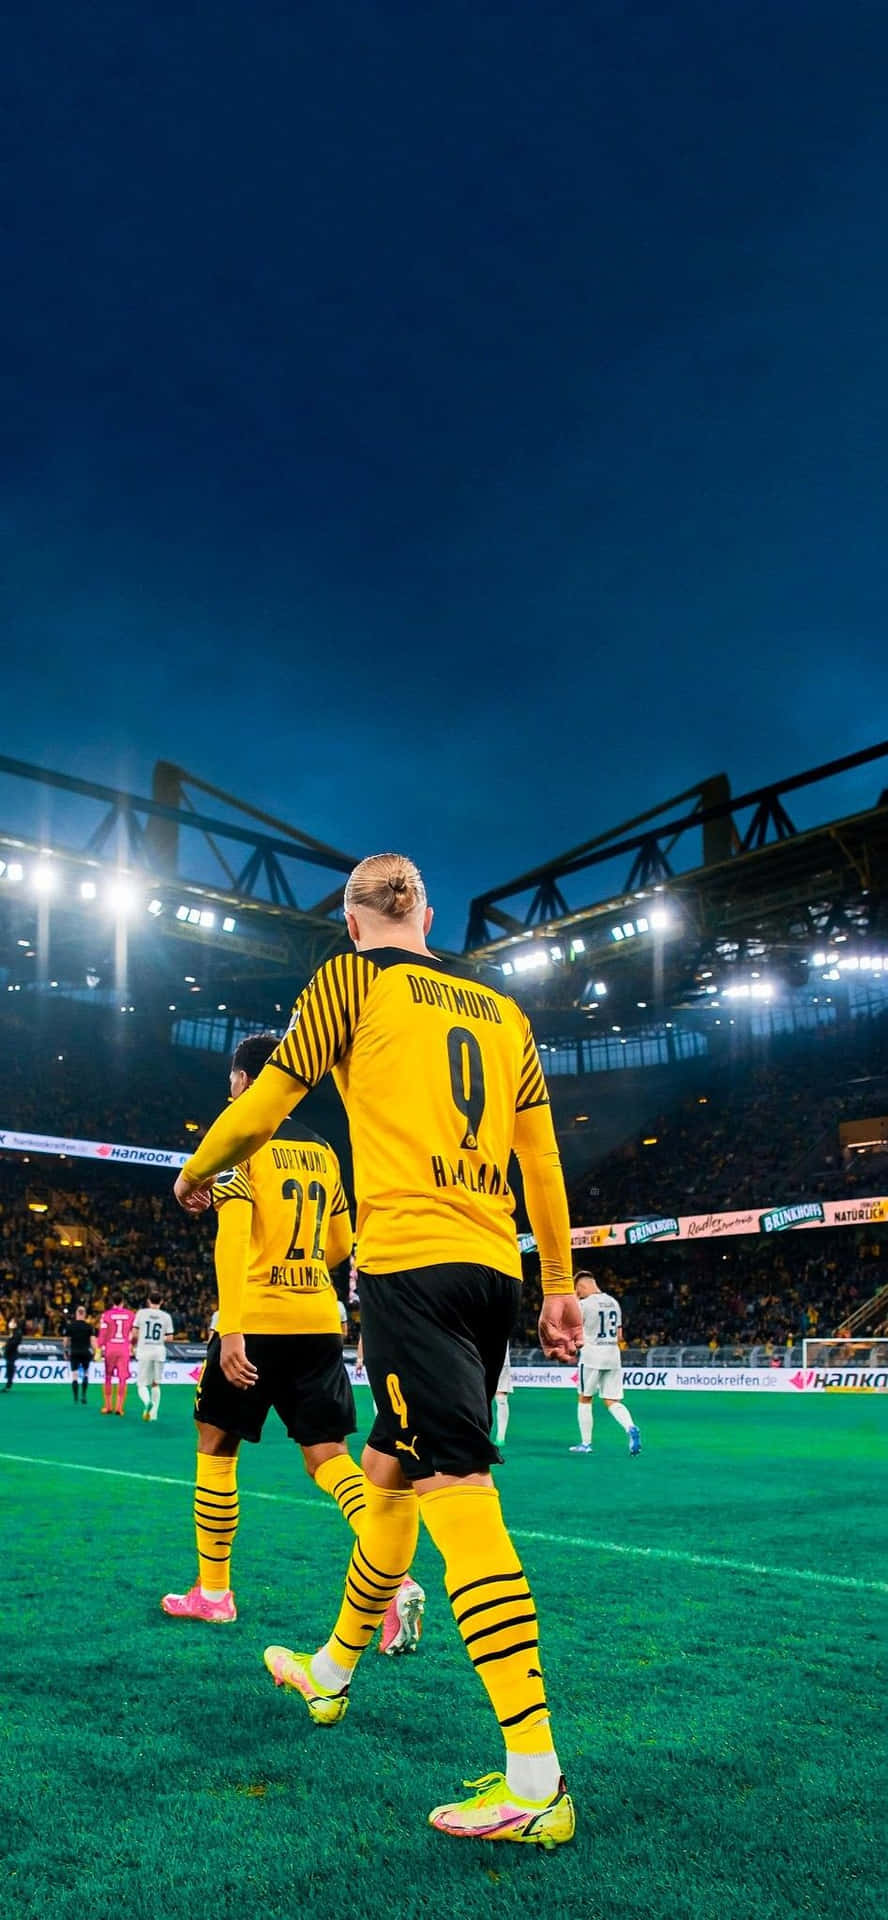 Soccer_ Night_ Match_ Dortmund_ Players Wallpaper